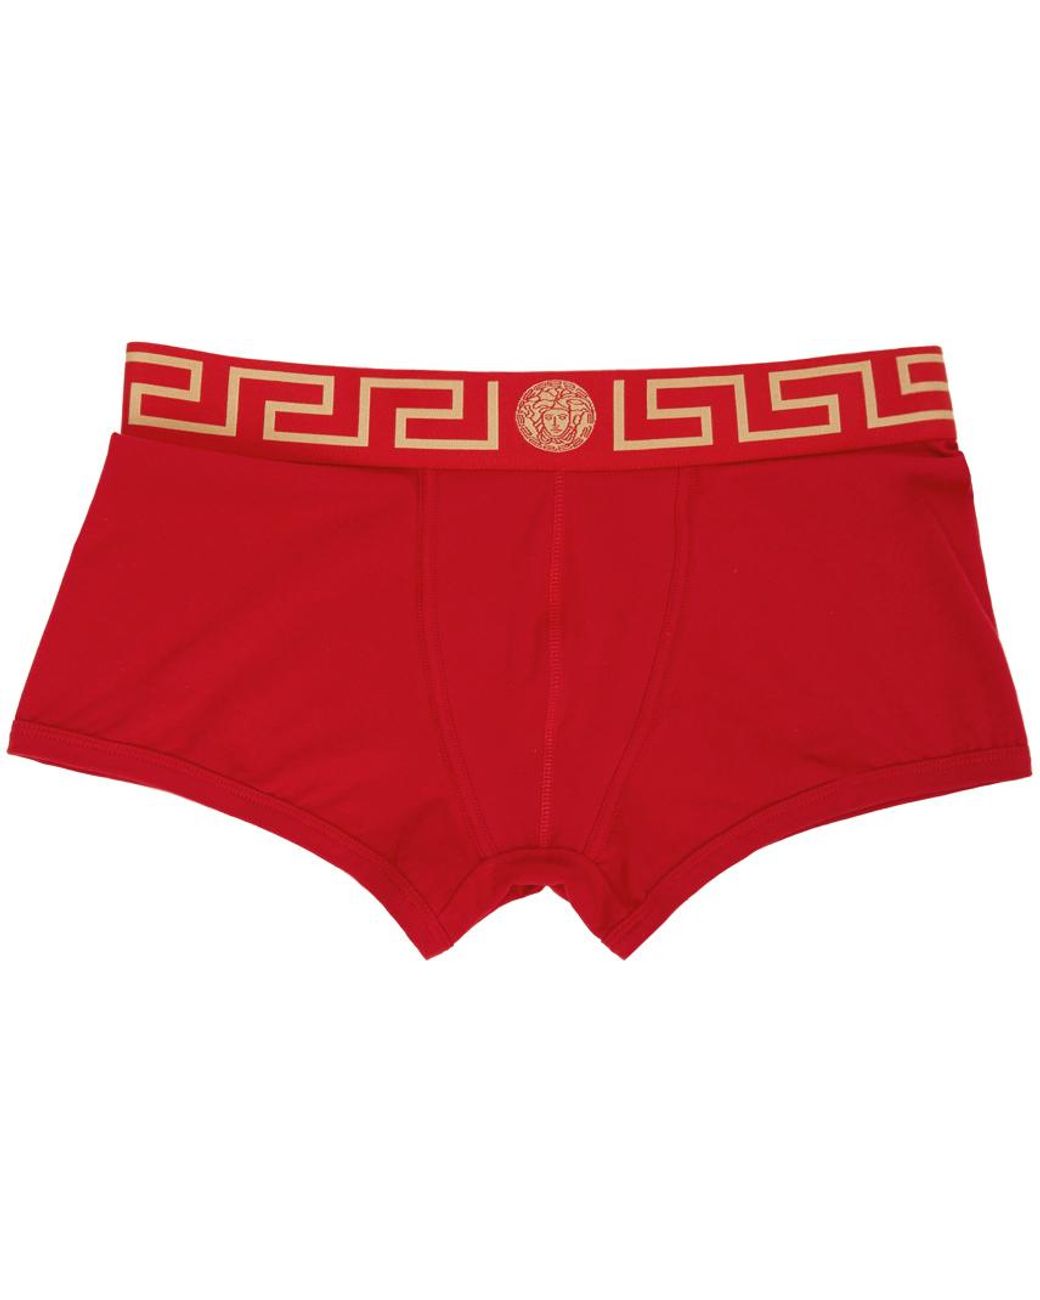 Versace Cotton Red Greca Border Boxer Briefs for Men - Lyst